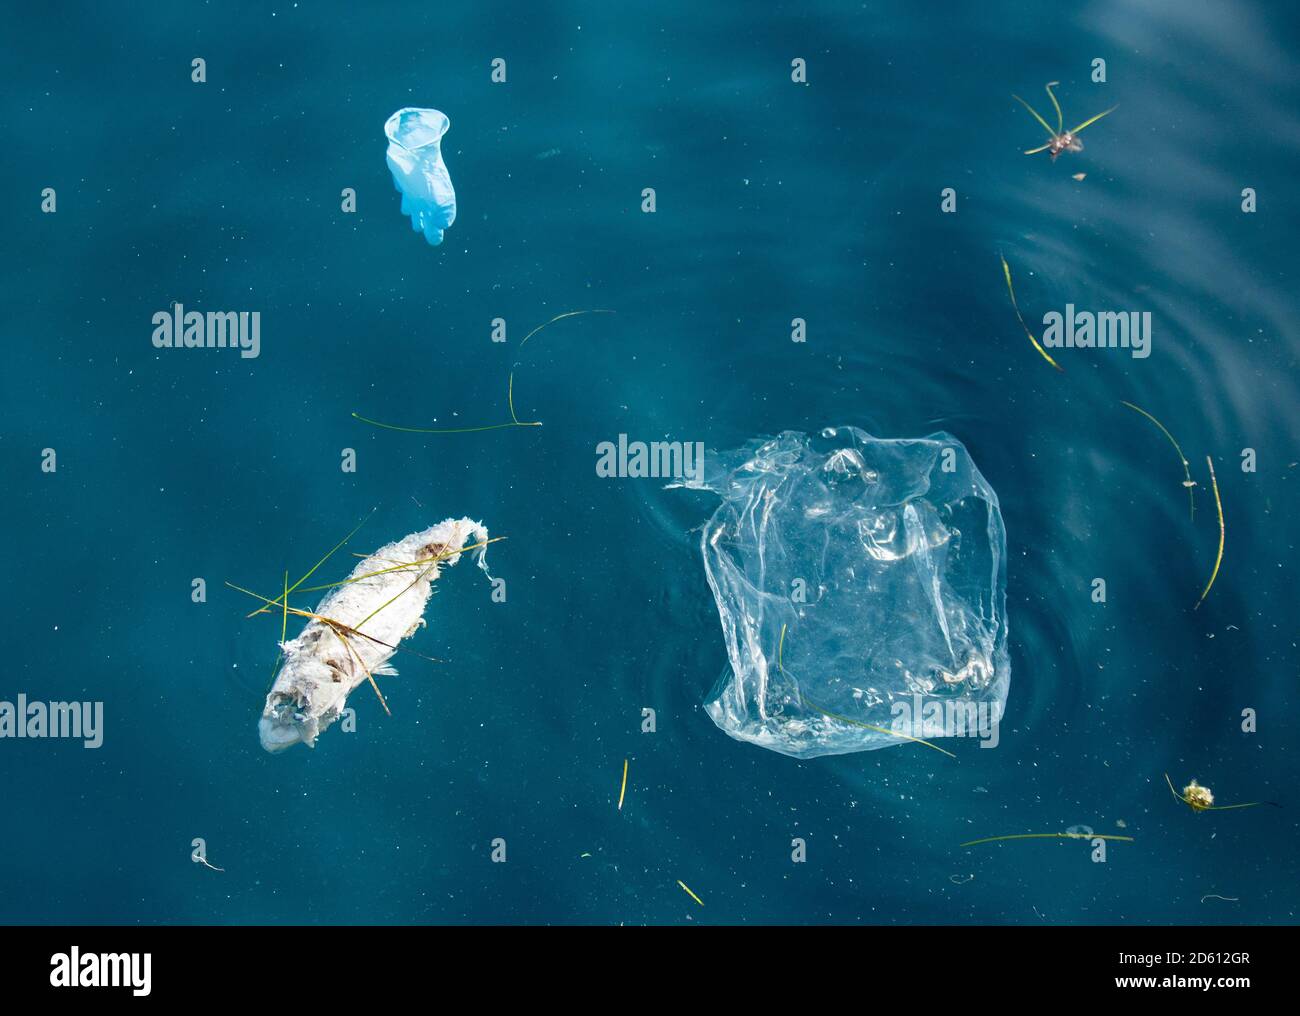 Dead fish, rubber glove and plastic bag in the sea, ocean, plastic pollution. Stock Photo